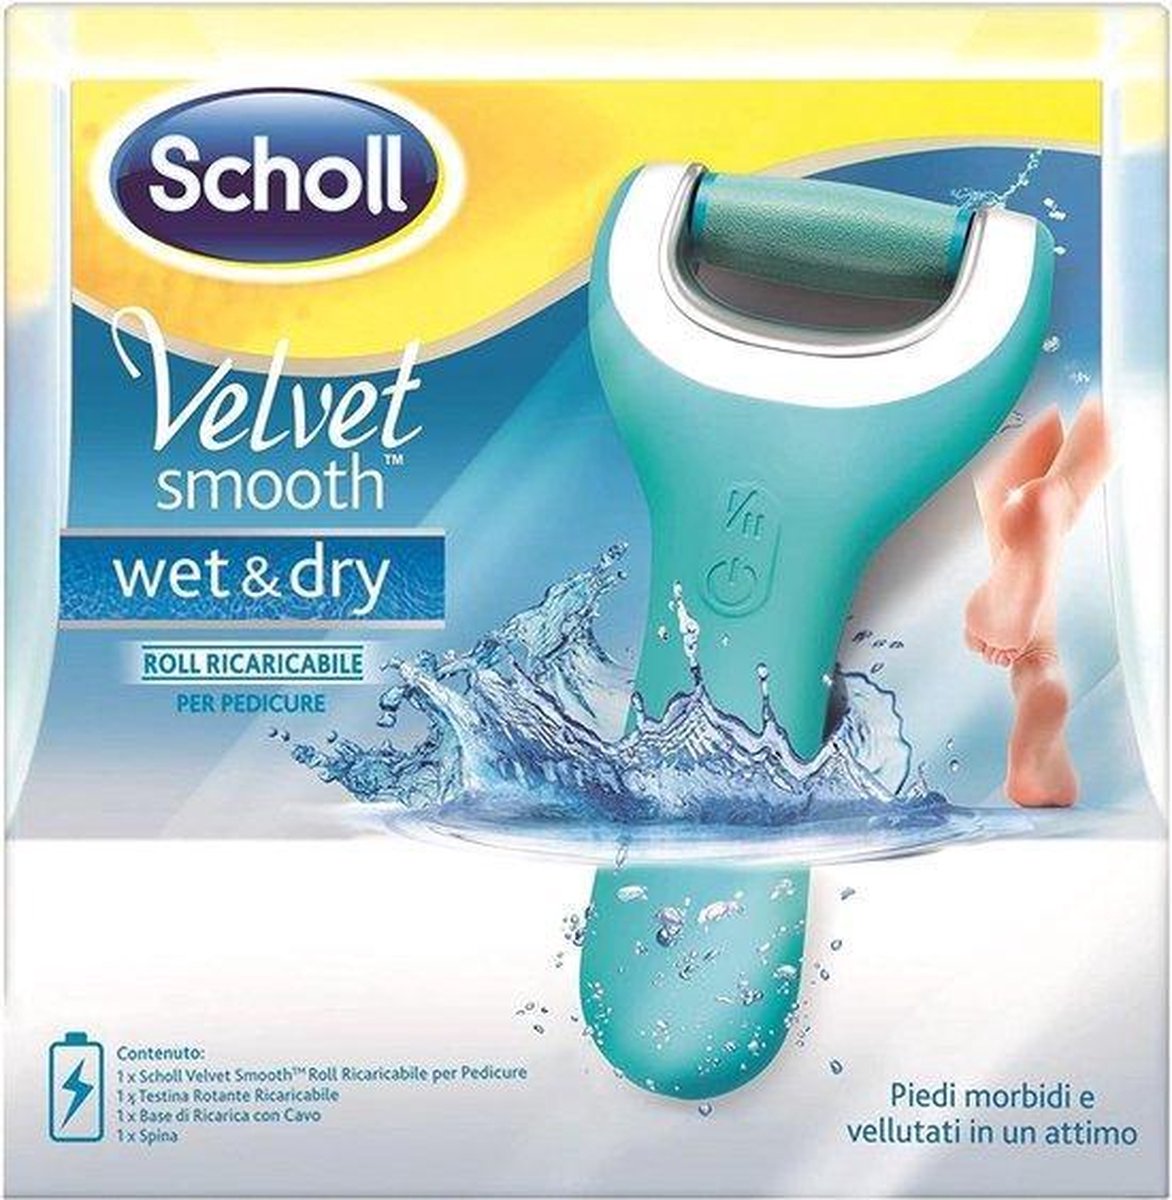 Dragende cirkel beven Vaak gesproken Scholl Velvet Smooth Voetvijl Wet & Dry - Starter - 1 stuk | bol.com